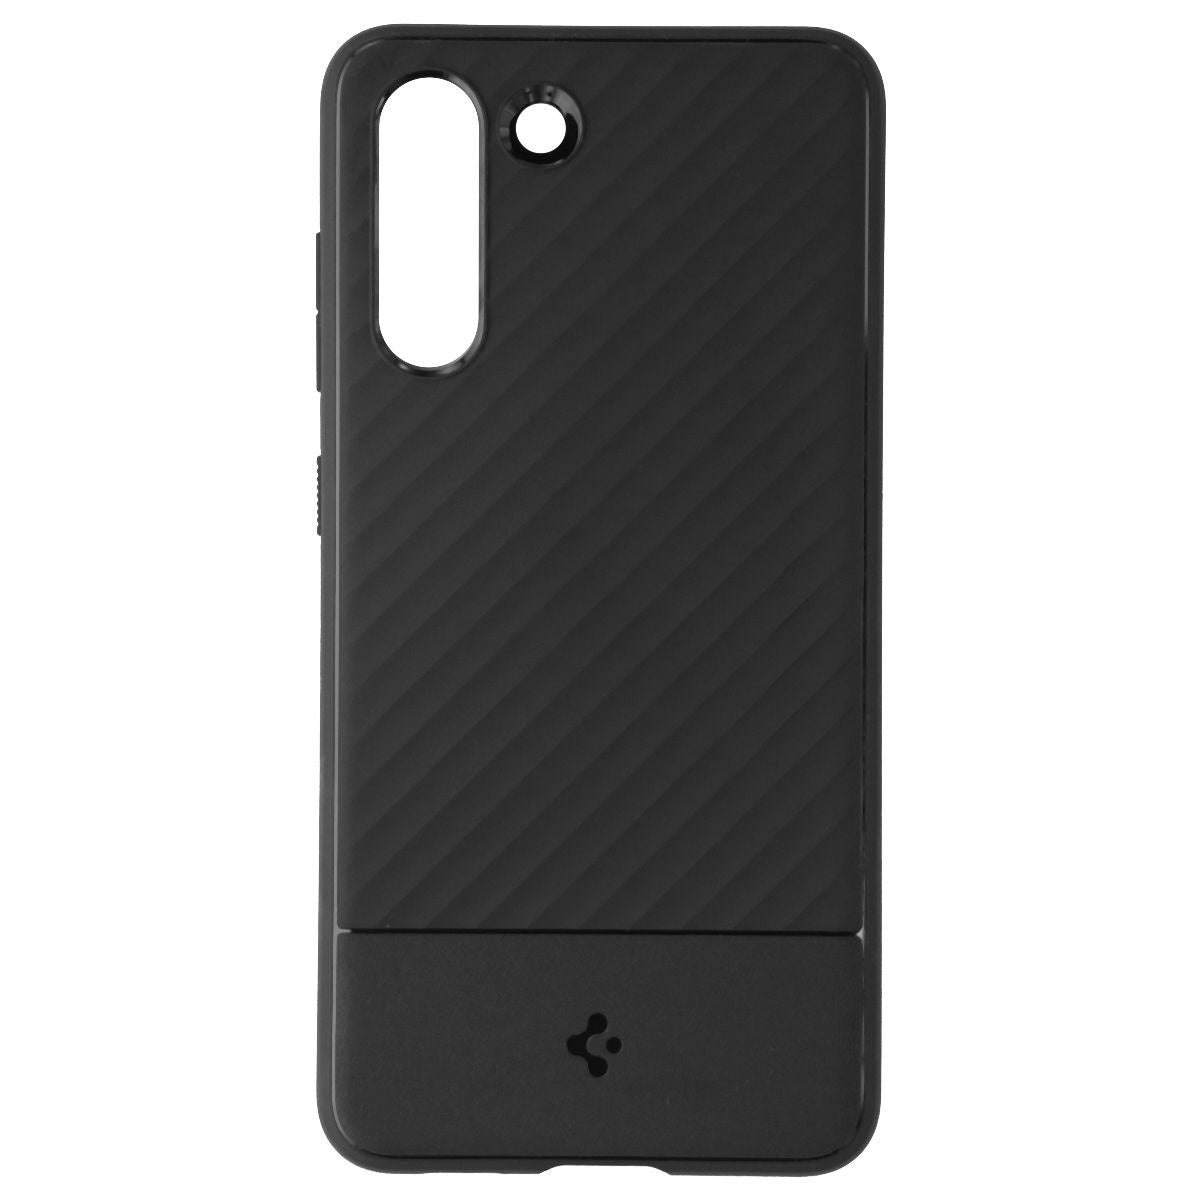 Spigen Core Armor Designed for Galaxy S21 FE Case (2021) - Matte Black Cell Phone - Cases, Covers & Skins Spigen    - Simple Cell Bulk Wholesale Pricing - USA Seller